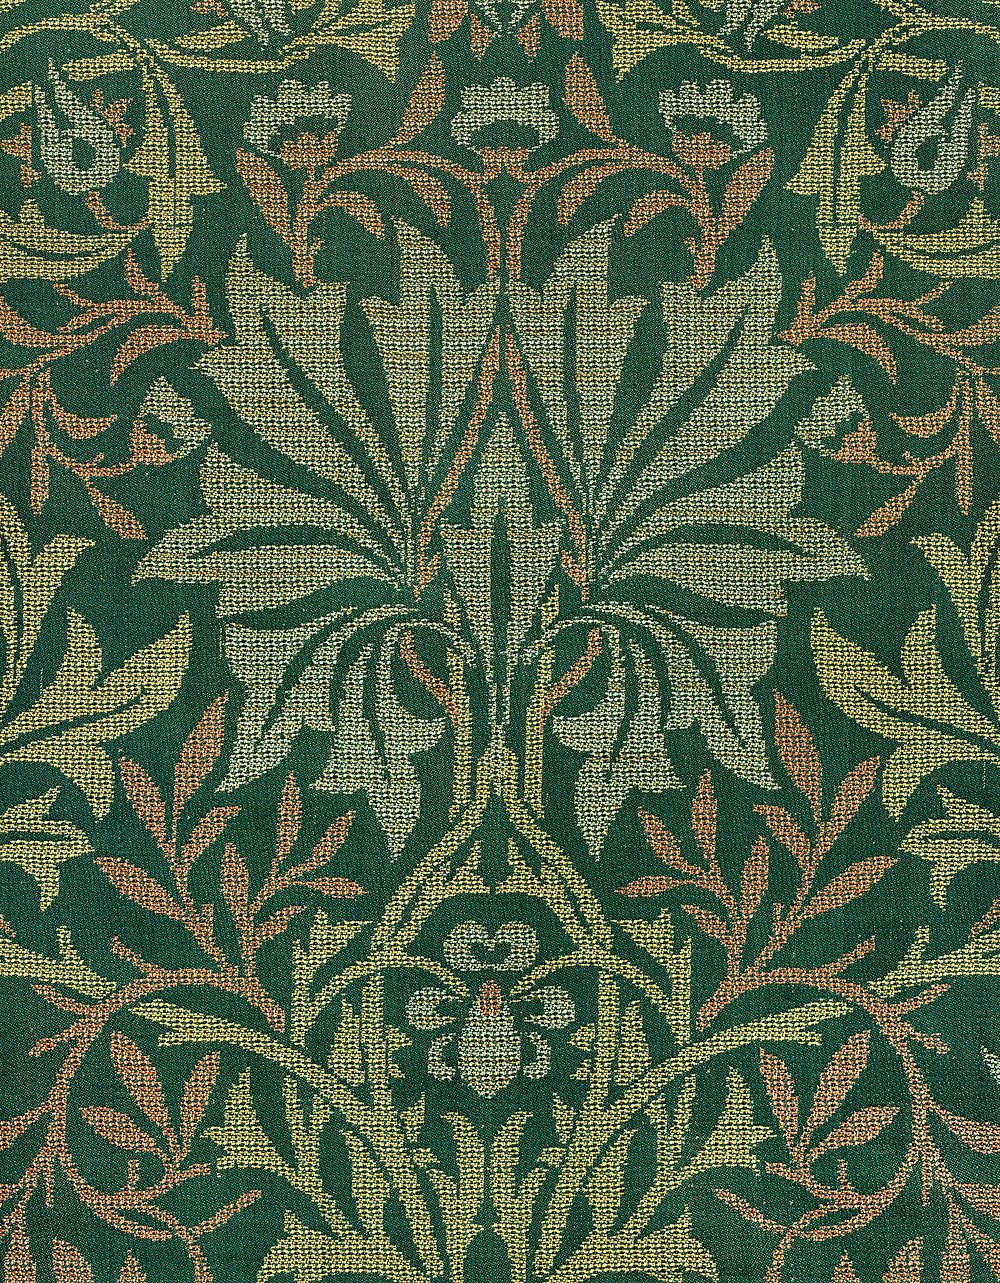 William Morris's (1834-1896) Flower Garden famous pattern. Original from The MET Museum. Digitally enhanced by rawpixel.